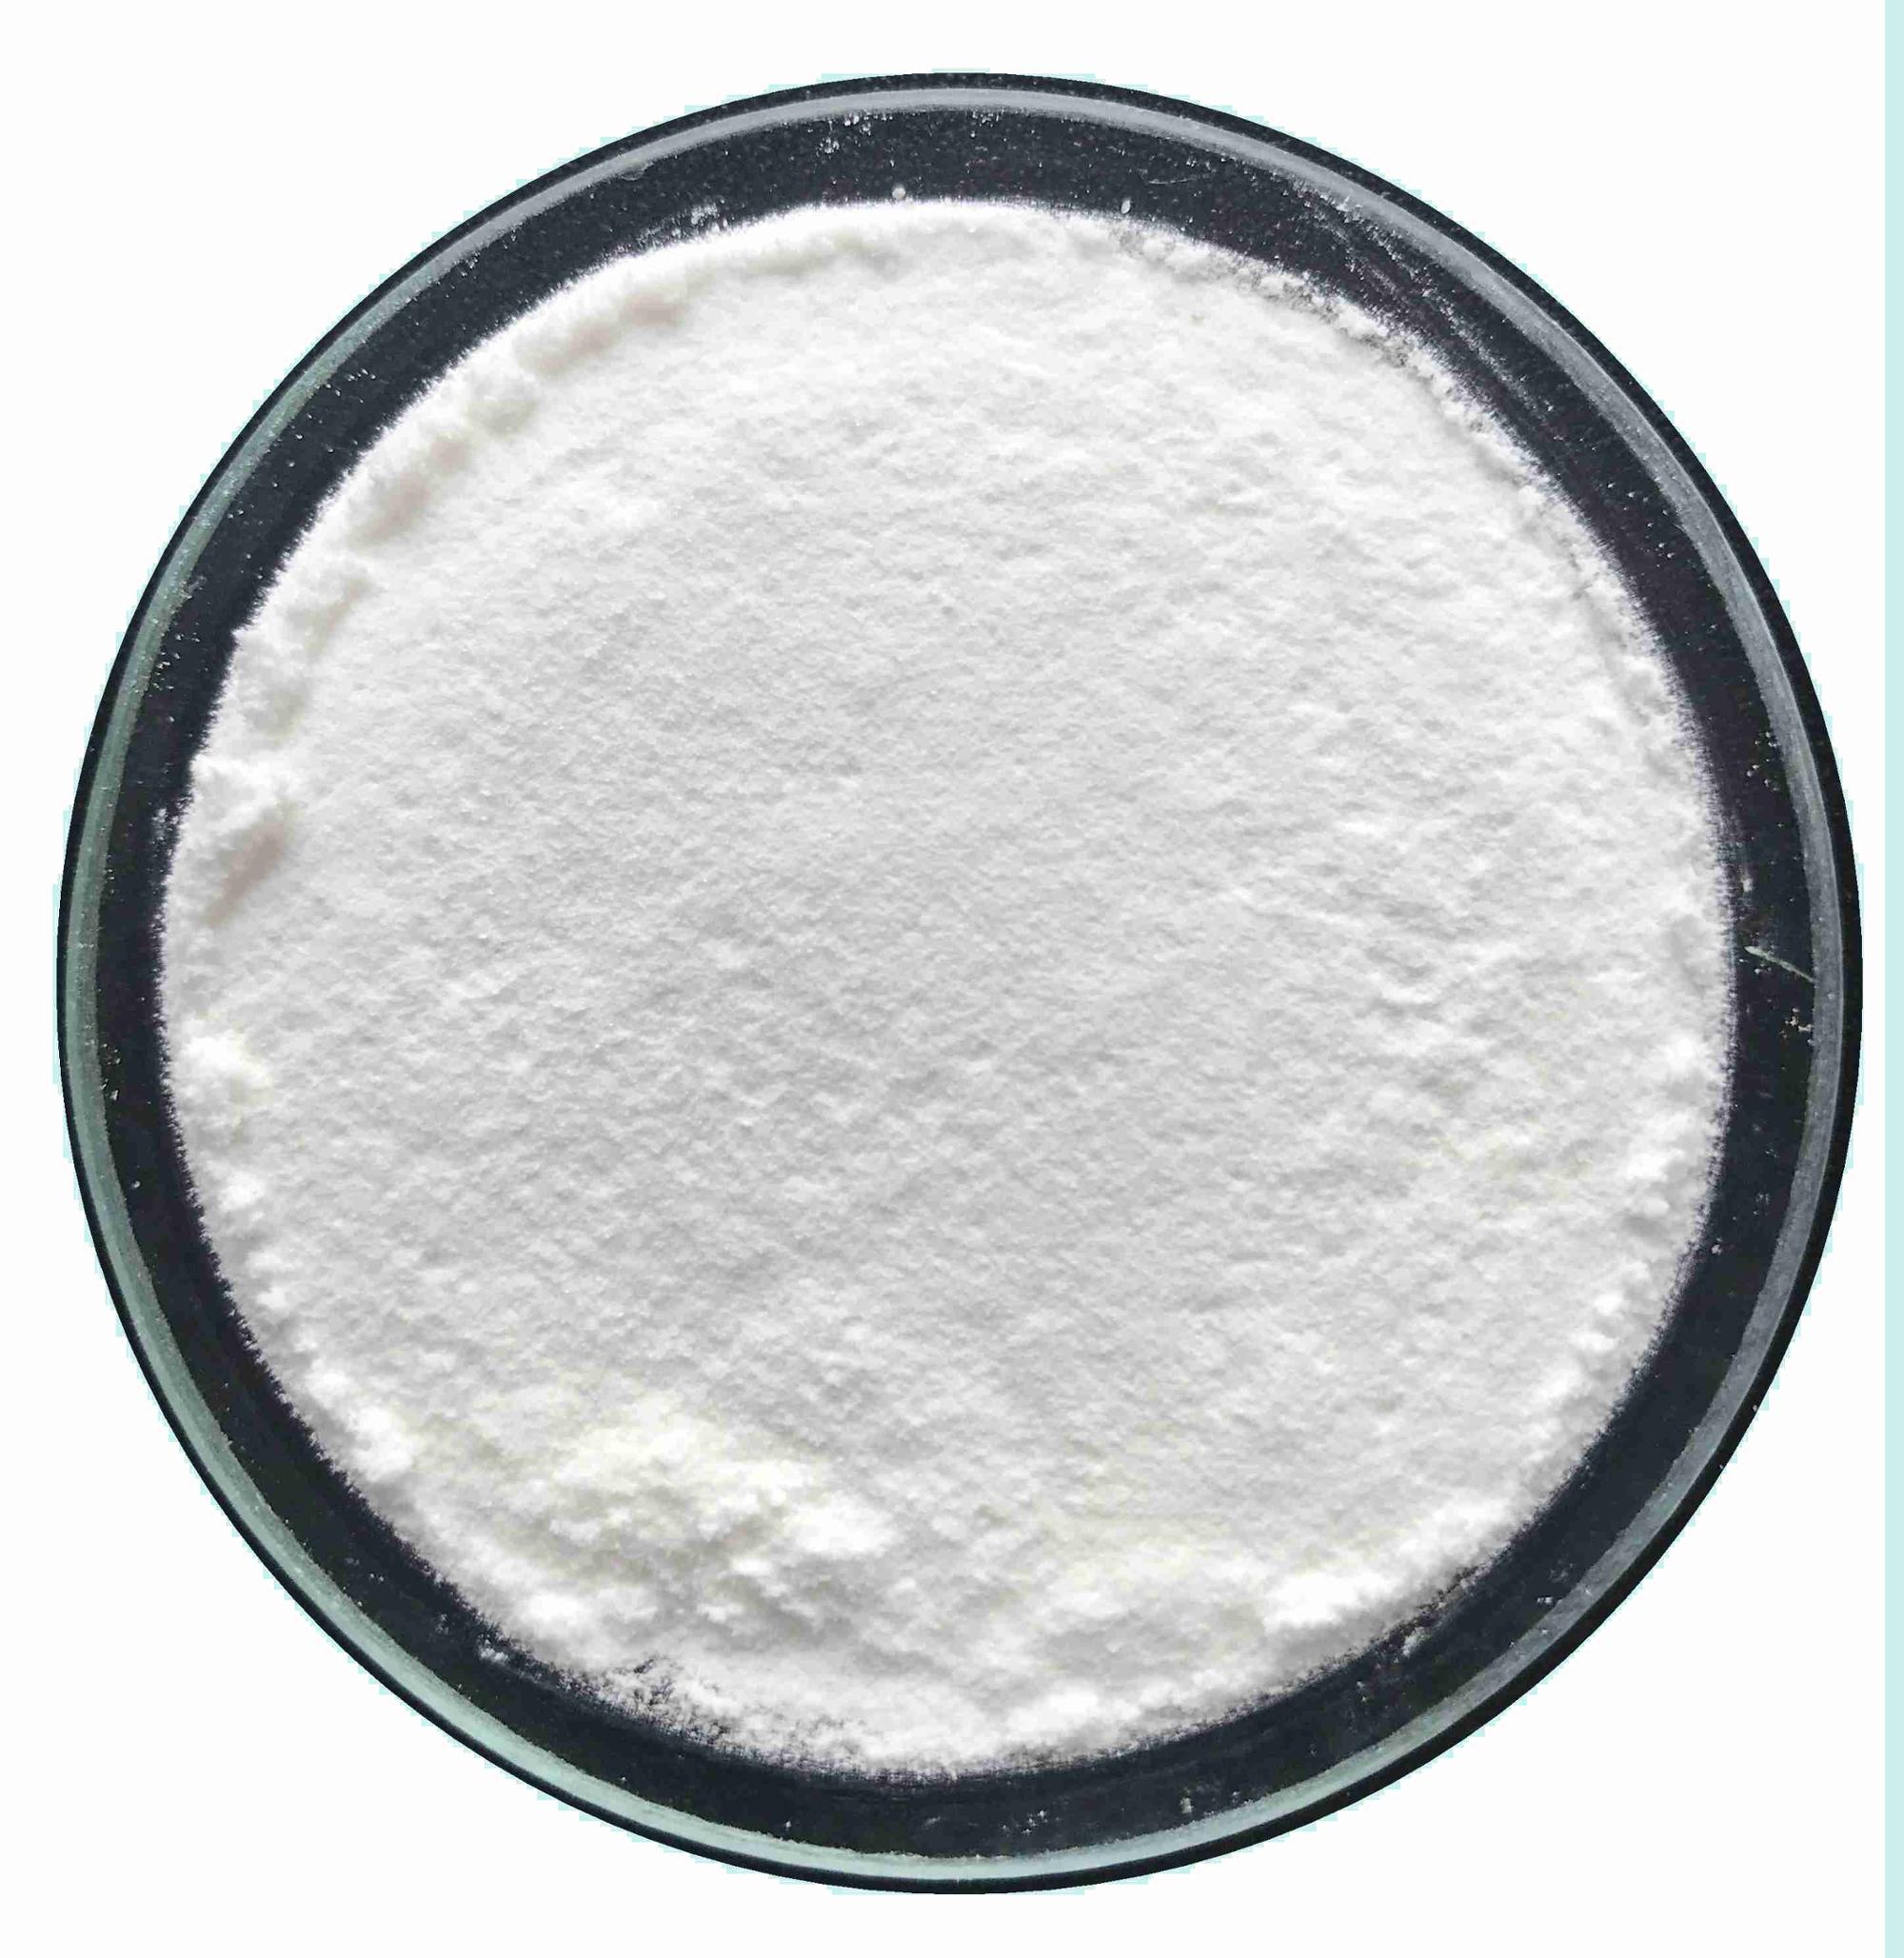 Tamoxifen/Tamoxifen citrate